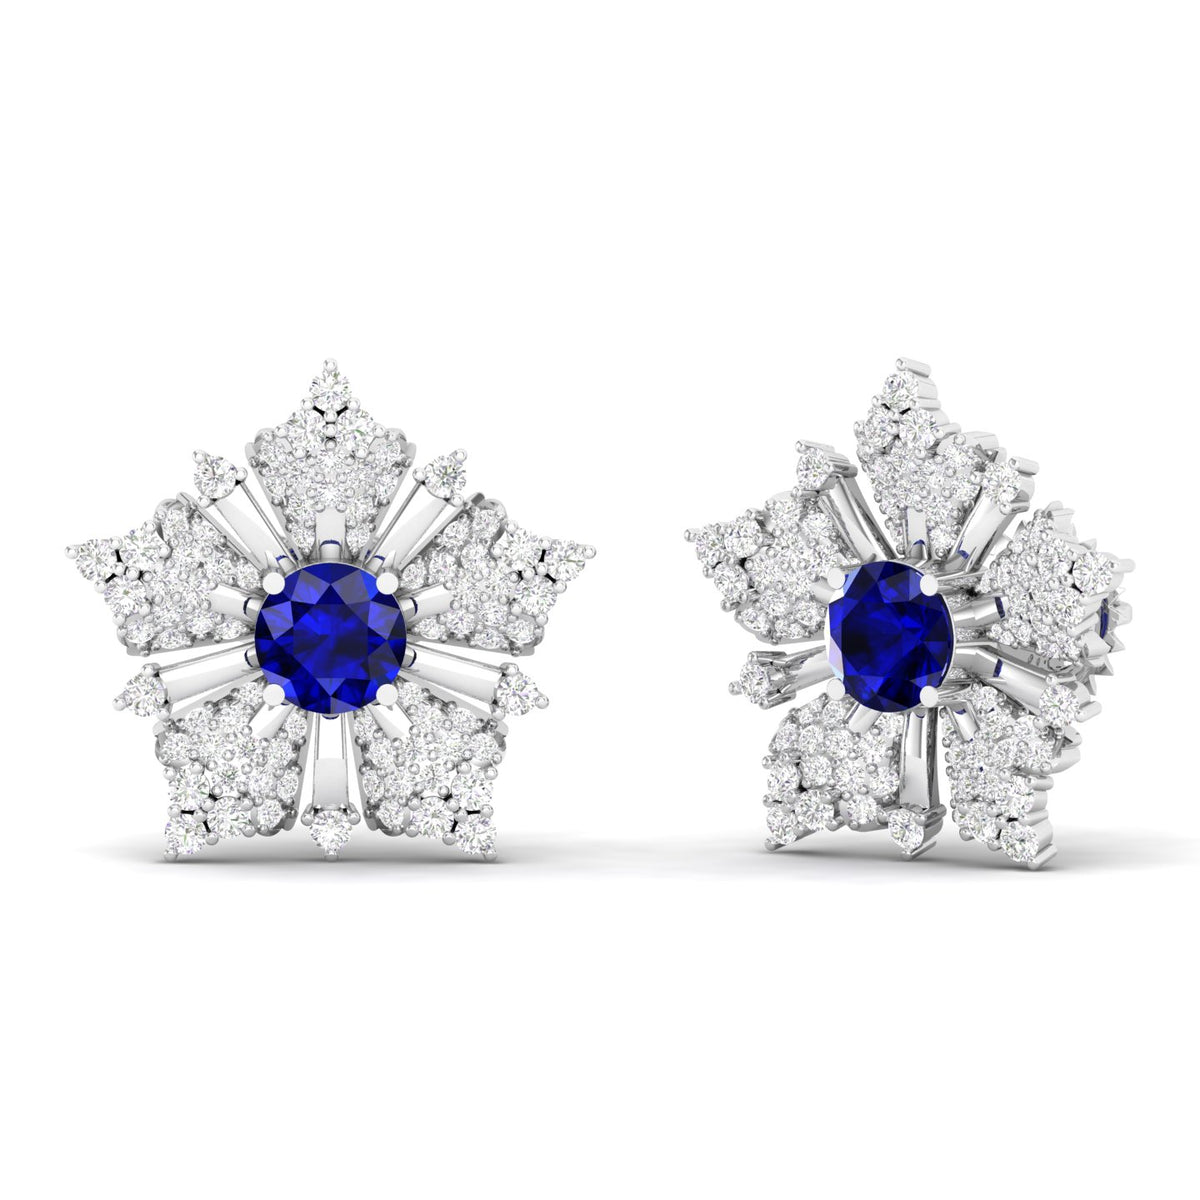 Maurya Nivis Push Back Earrings with Blue Sapphire and Diamonds